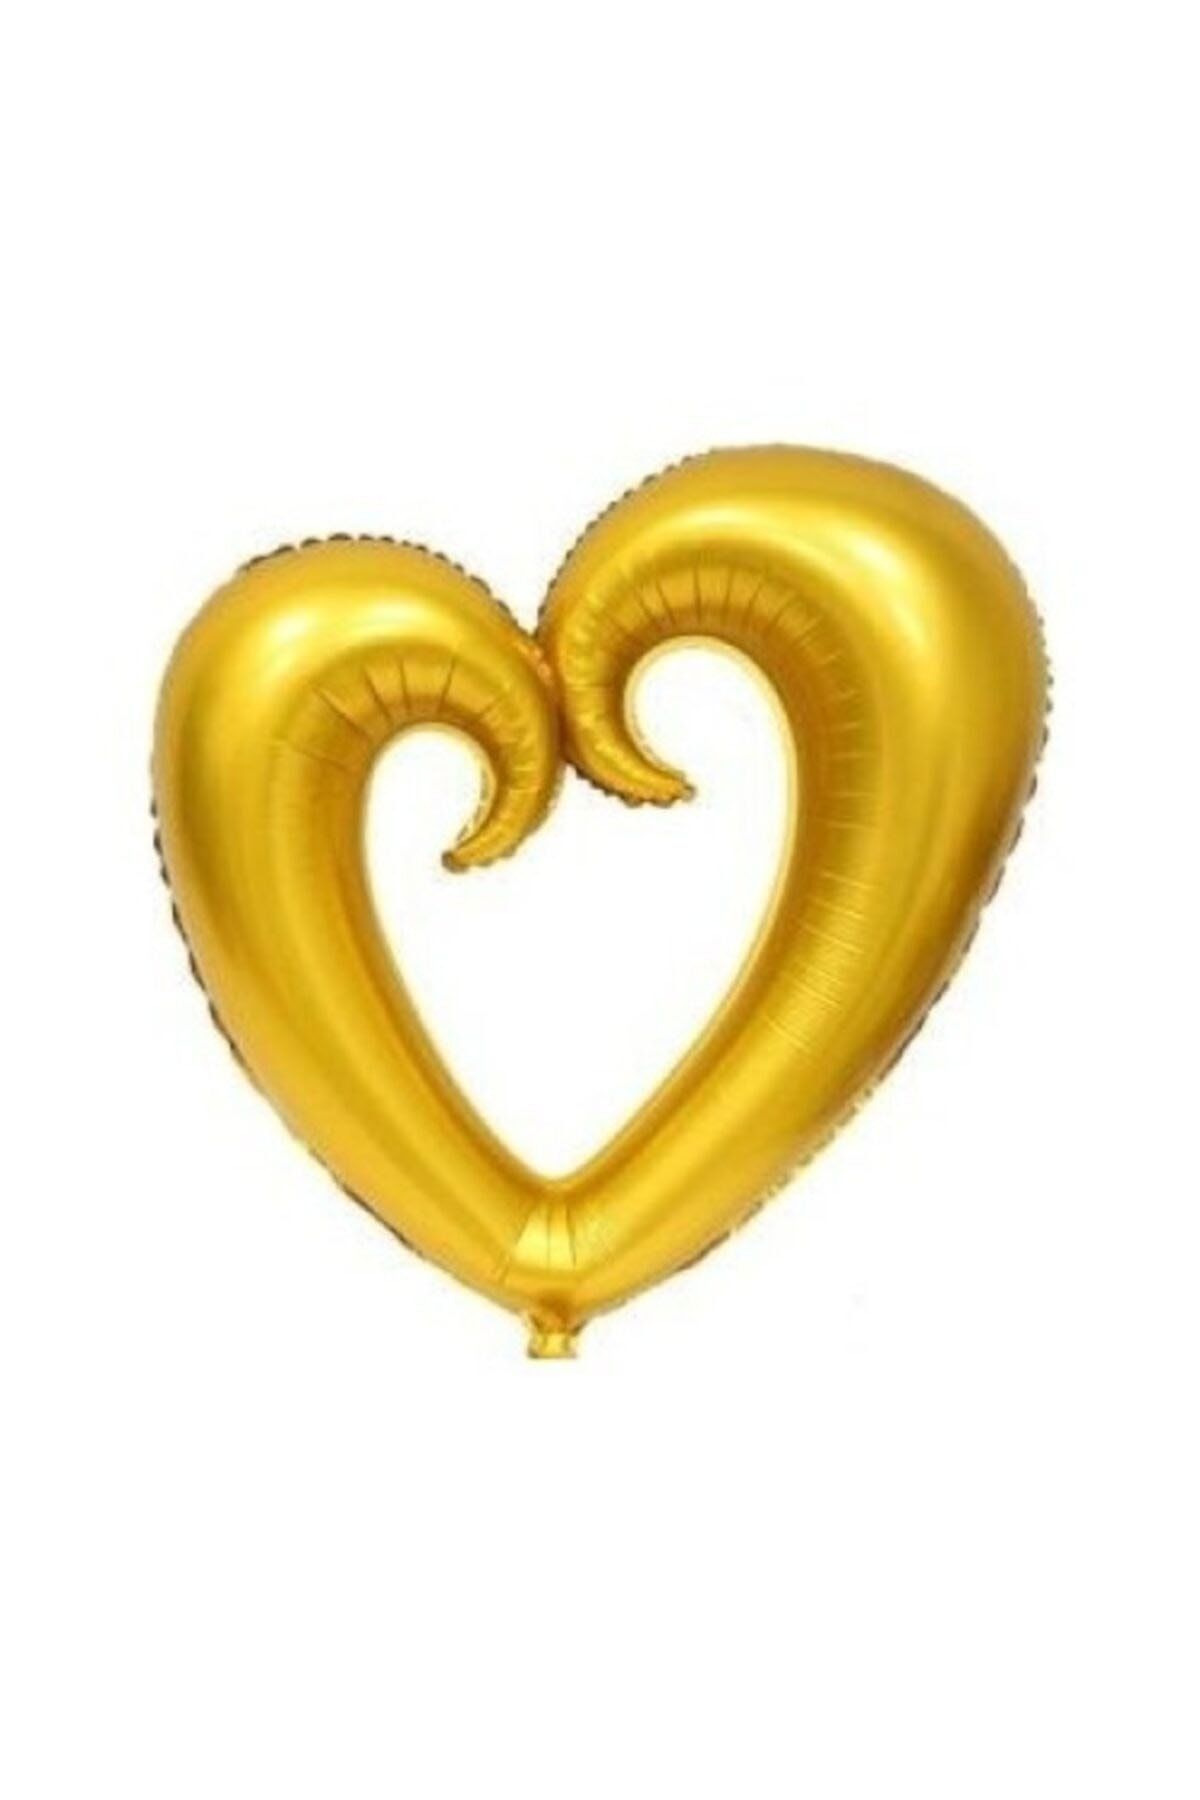 PartylandTR Gold Kalp Folyo Balon 110 Cm